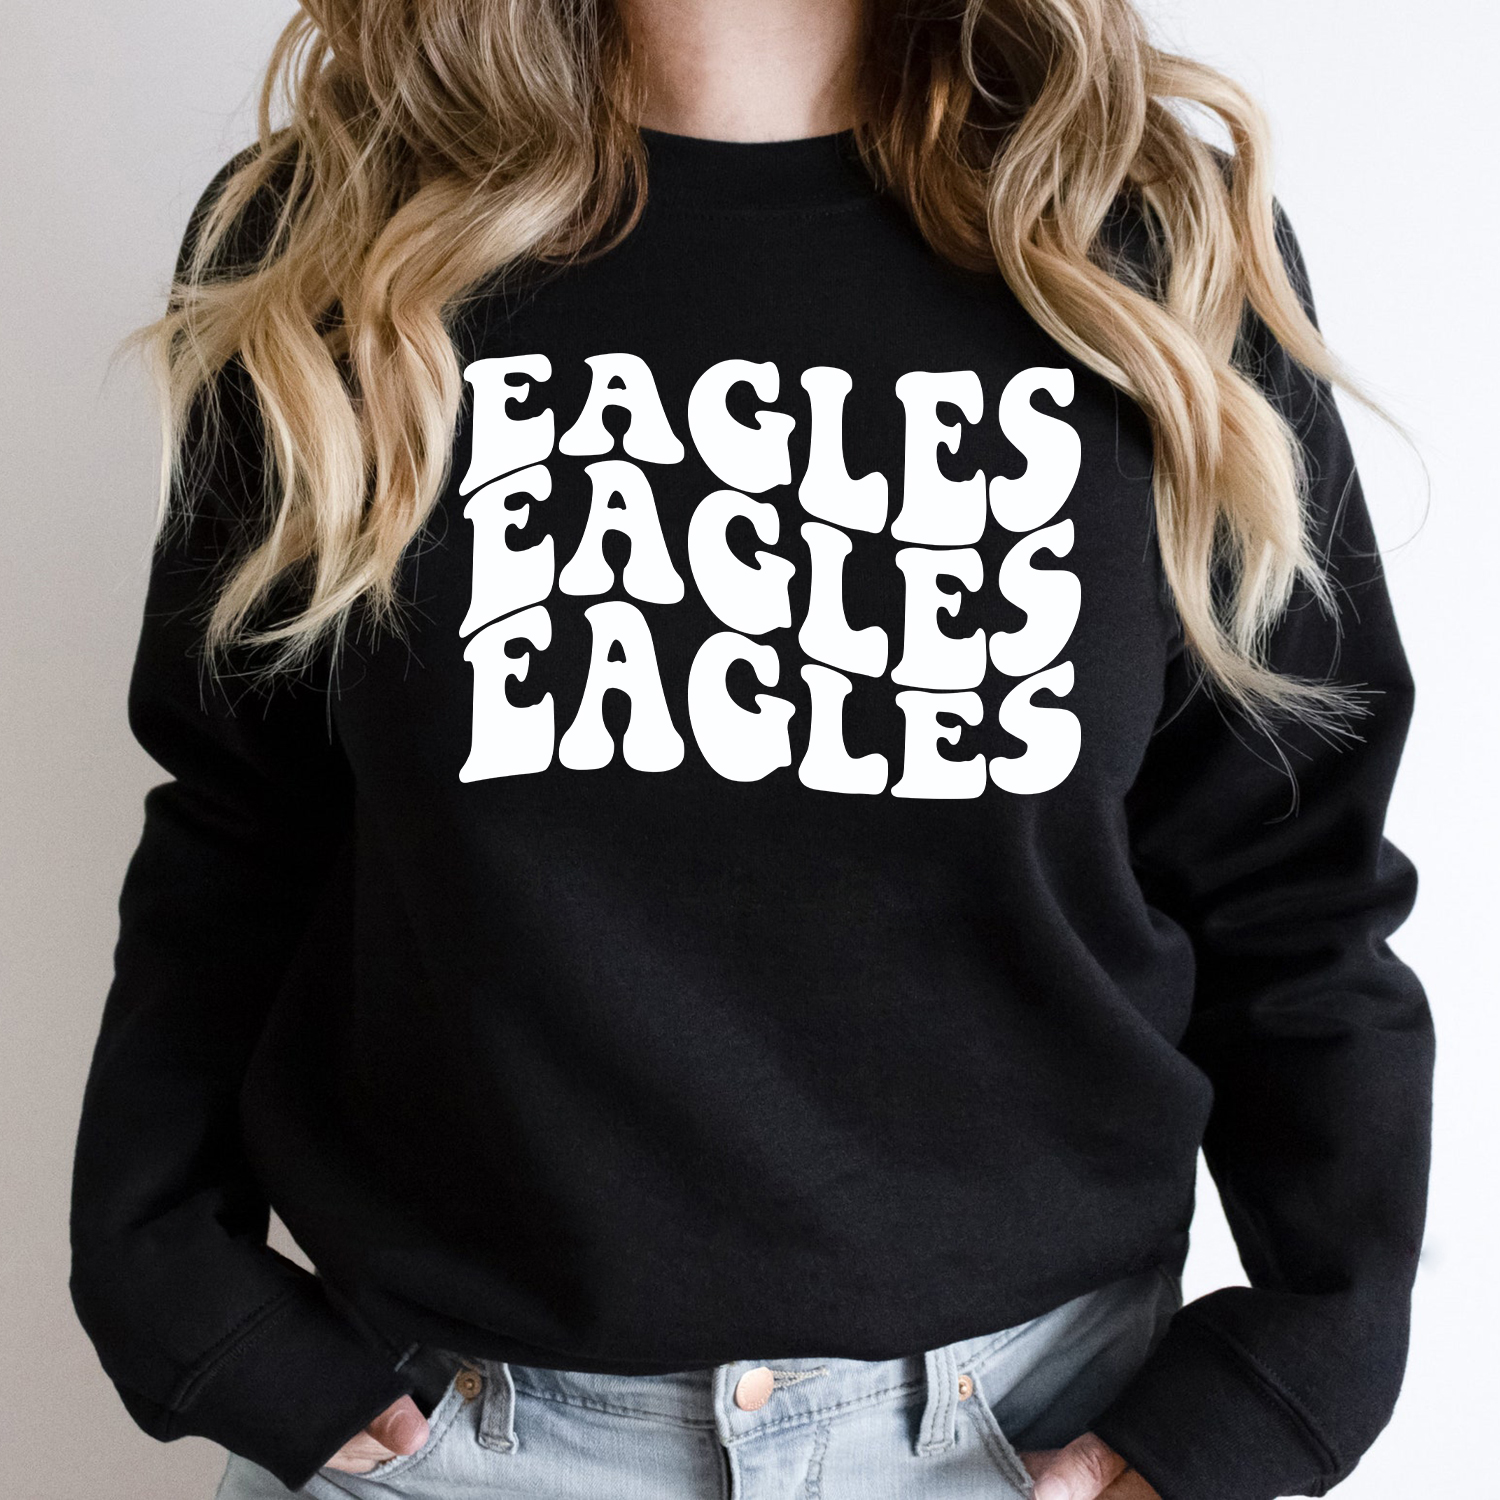 womens eagles gear